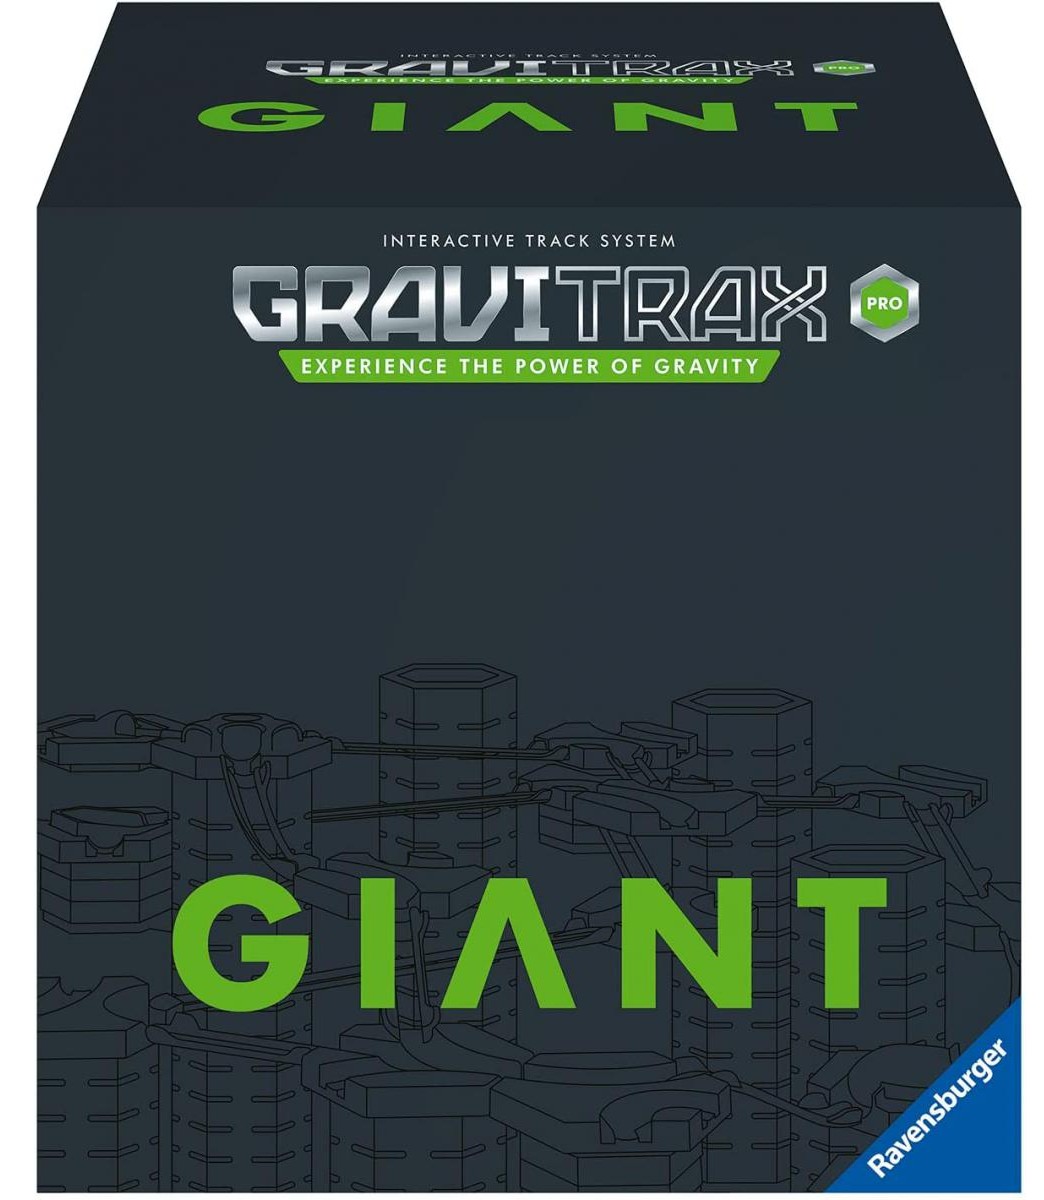 Boîte du jeu GraviTrax Pro - Starter Set (Giant)